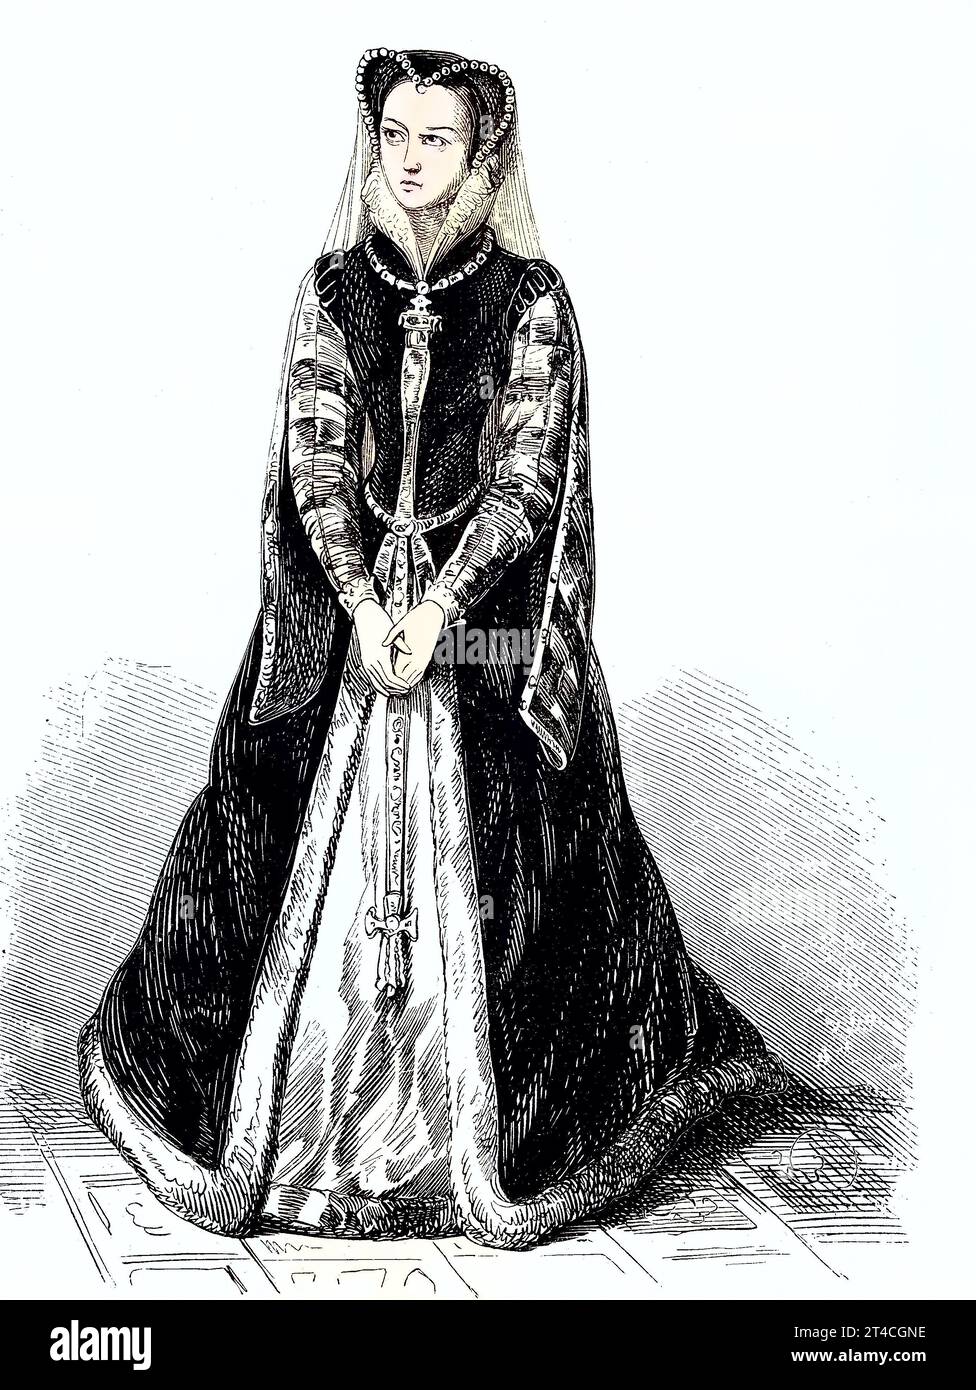 Maria Stuart als entthronte Königin. Maria, Königin der Schotten, 8. Dezember 1542 - 8. Febbraio 1587, auch bekannt als Maria Stuart oder Maria I. von Schottland, regierte vom 14. Dezember 1542 bis zum 24. Juli 1567 über Schottland, Reproduktion eines Holzschnitts aus dem Jahr 1880, digital verbessert / Maria Stuart come regina detronizzata. Maria, Regina di Scozia, 8 dicembre 1542 - 8 febbraio 1587, nota anche come Maria Stuart o Maria i di Scozia, regnò sulla Scozia dal 14 dicembre 1542 al 24 luglio 1567, riproduzione di una xilografia dell'anno 1880, digitale migliorata Foto Stock